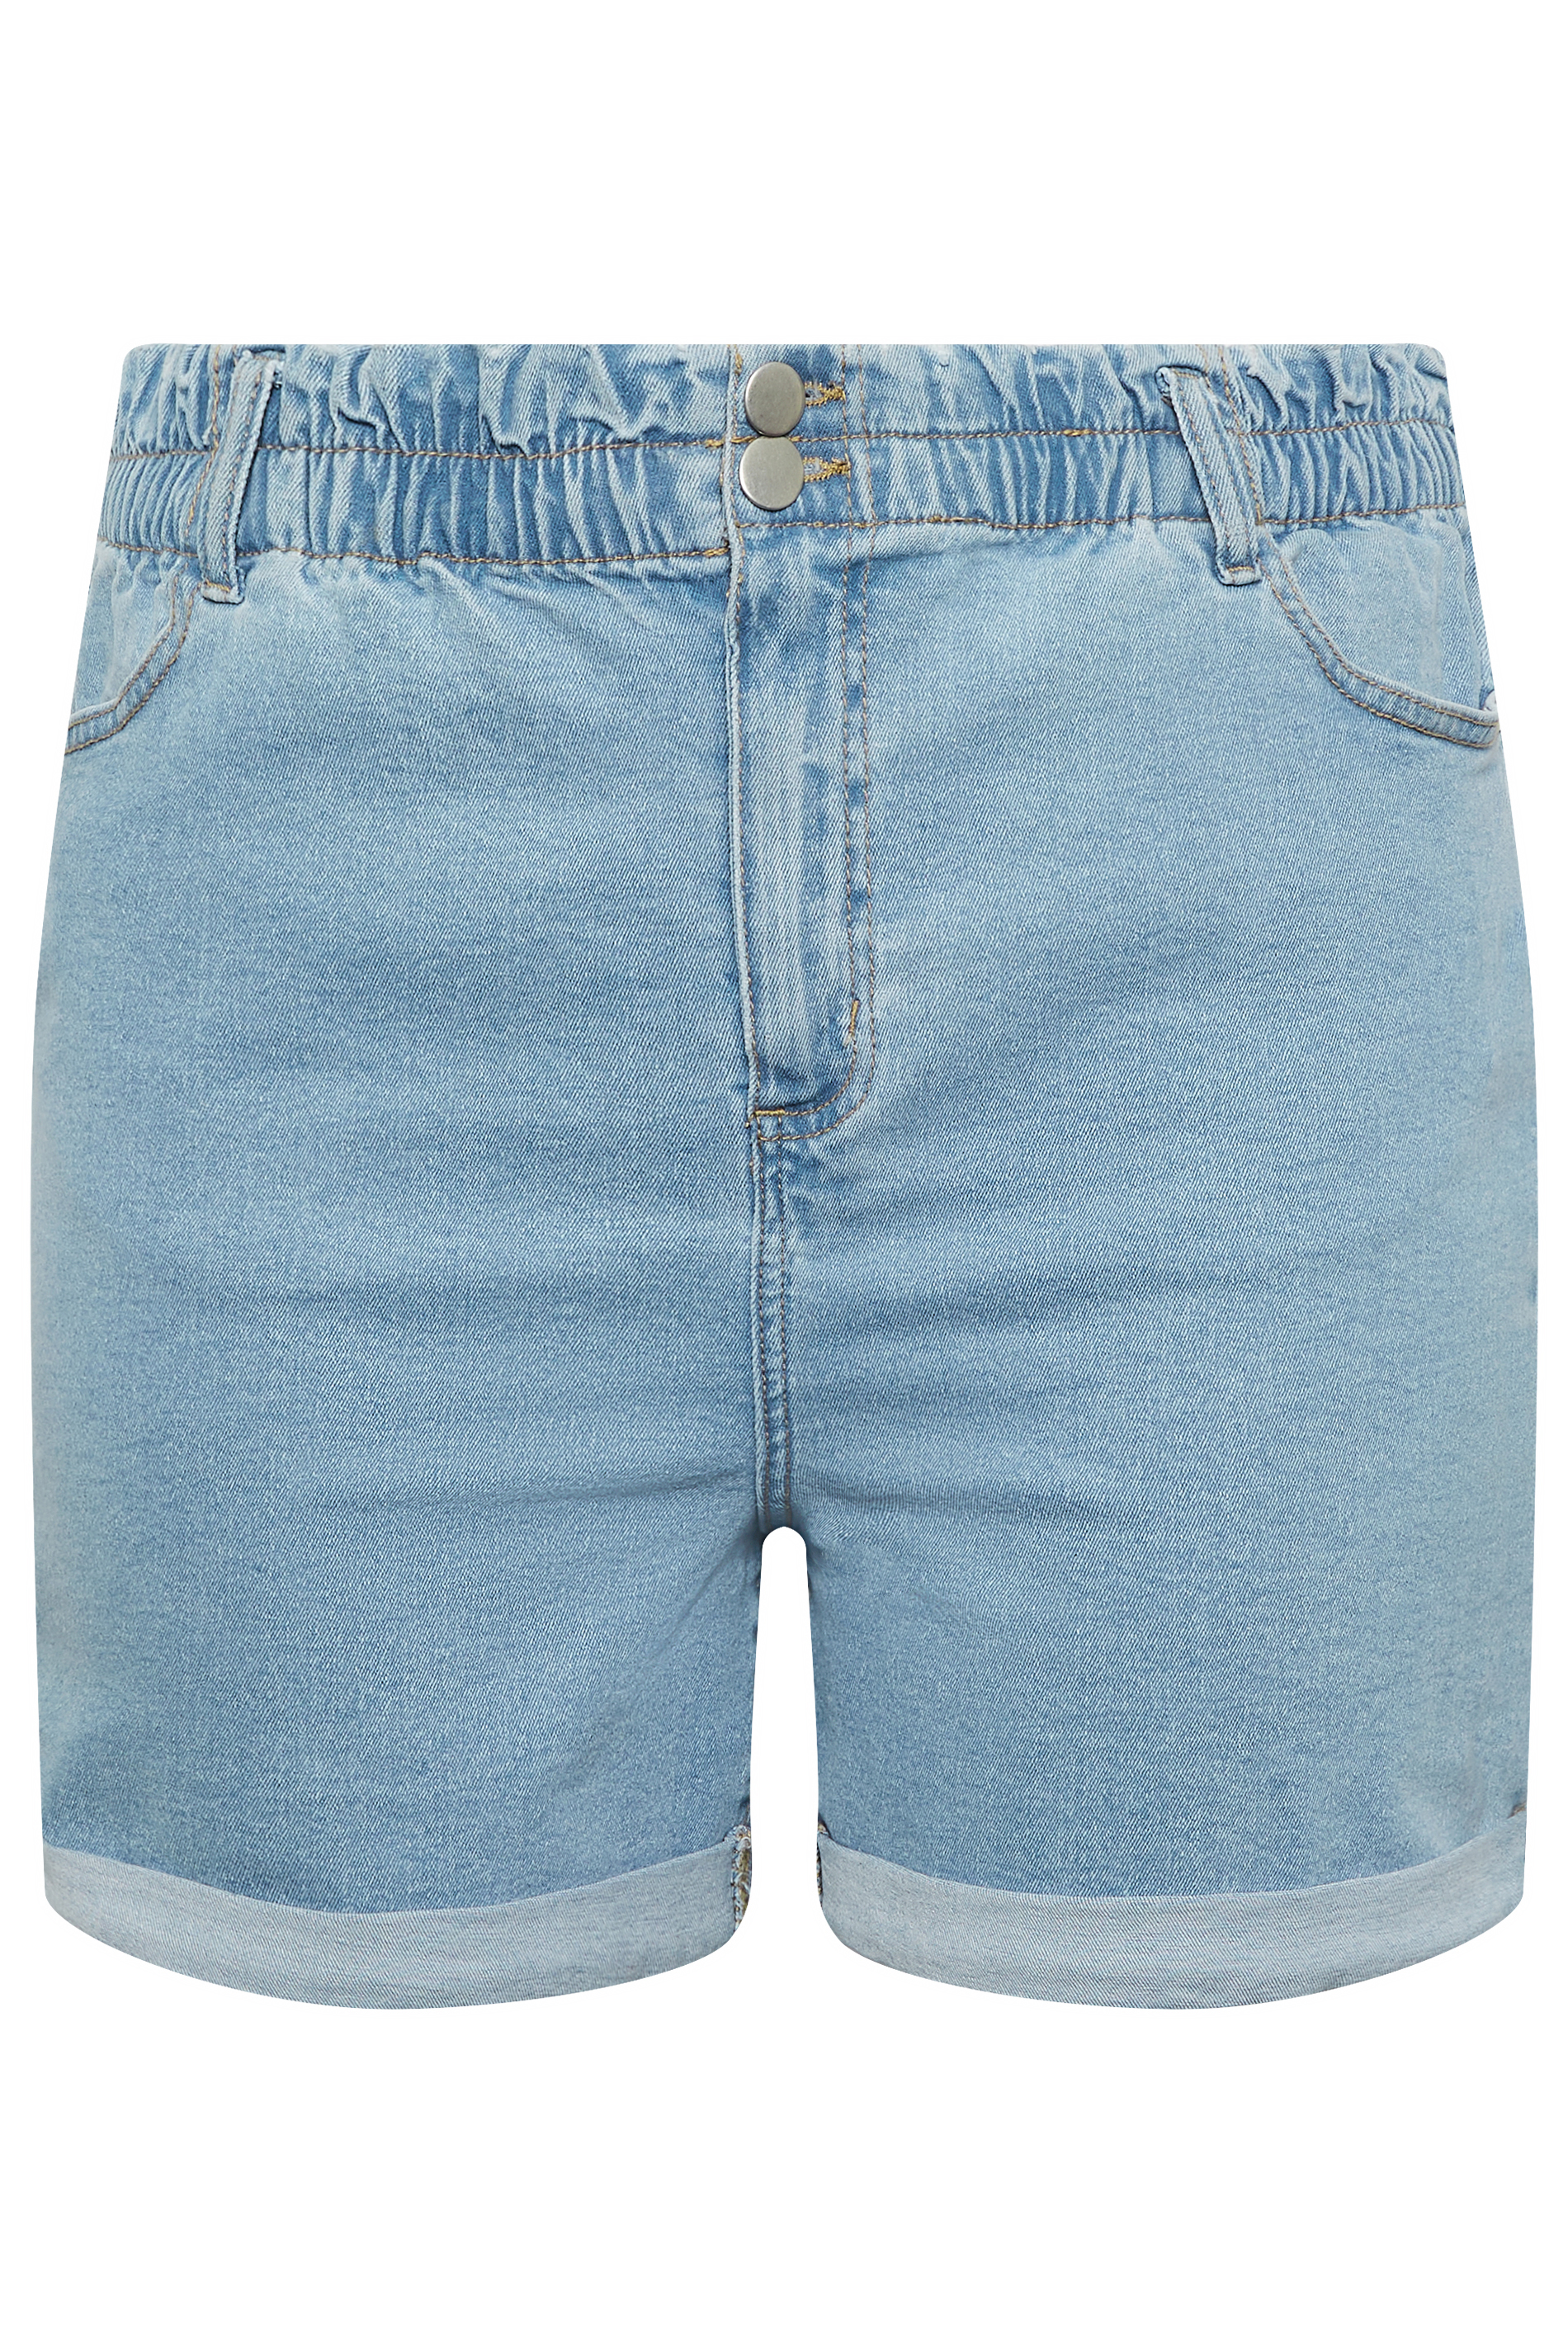 YOURS Plus Size Light Blue Elasticated Waist Denim Shorts | Yours Clothing 3